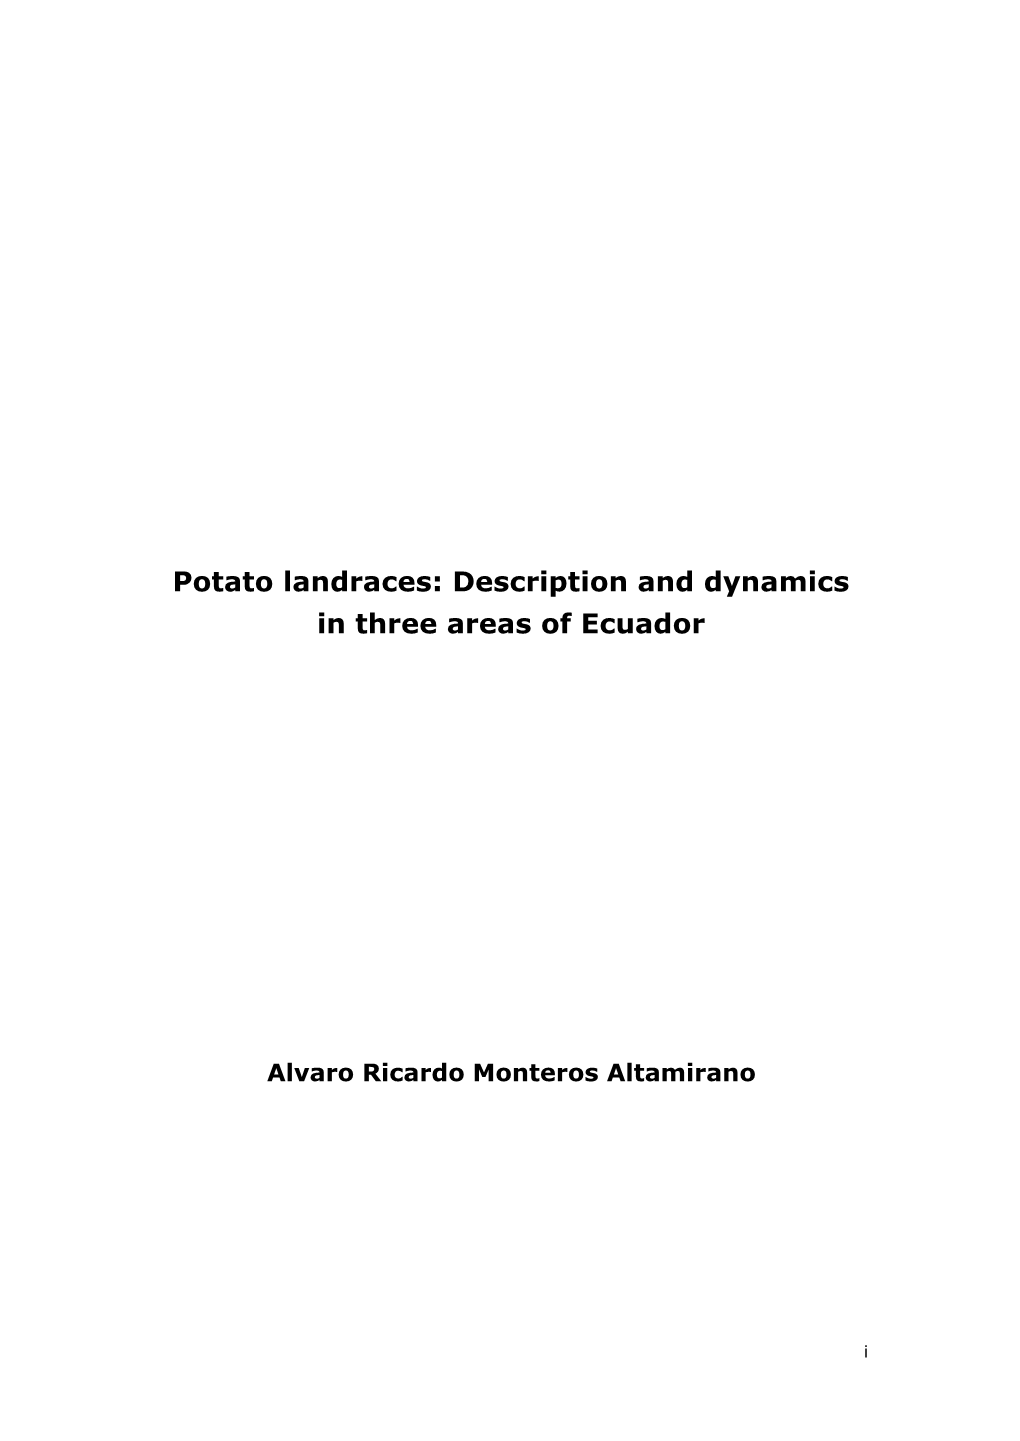 Potato Landraces: Description and Dynamics in Three Areas of Ecuador